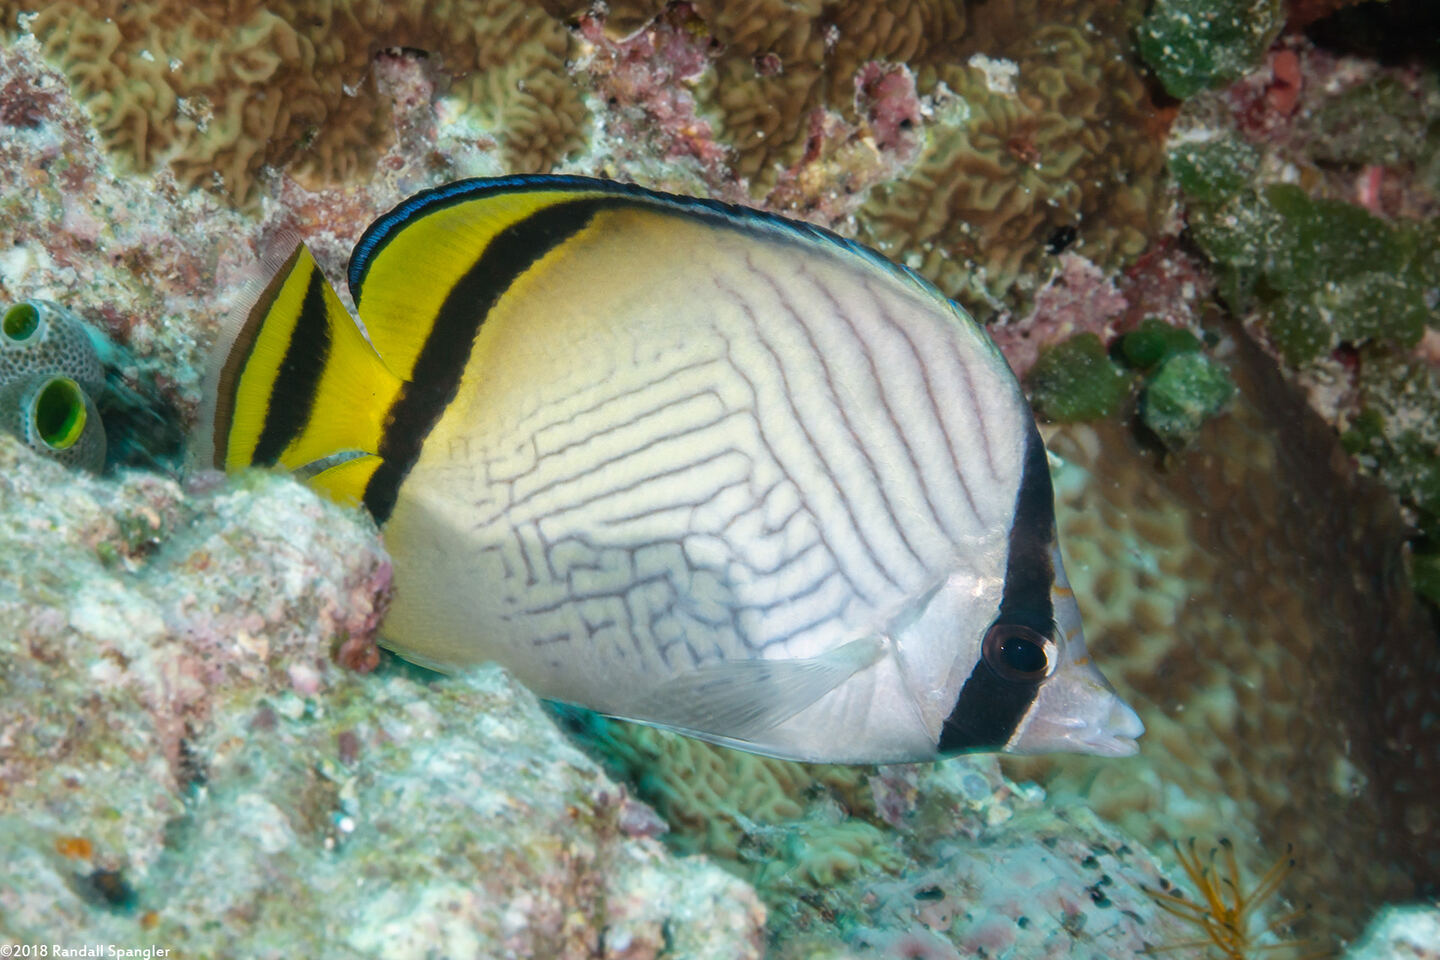 Chaetodon vagabundus (Vagabond Butterflyfish); Distorted pattern on the side